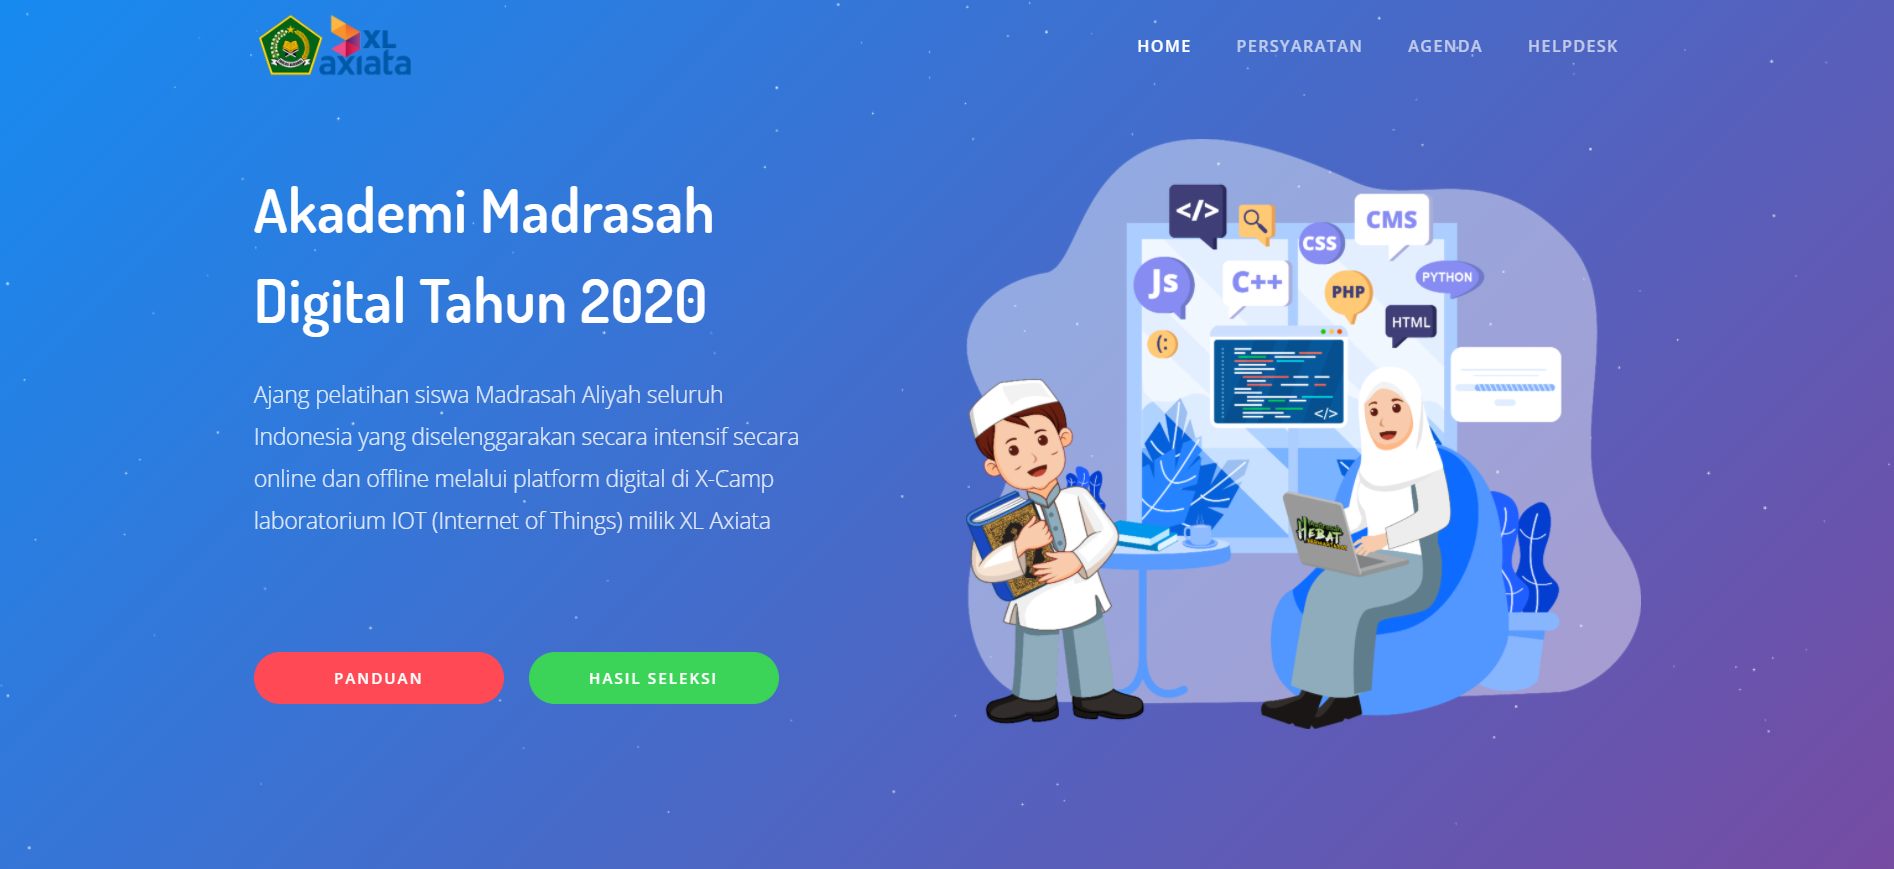 Akademi Madrasah Digital Tahun 2020